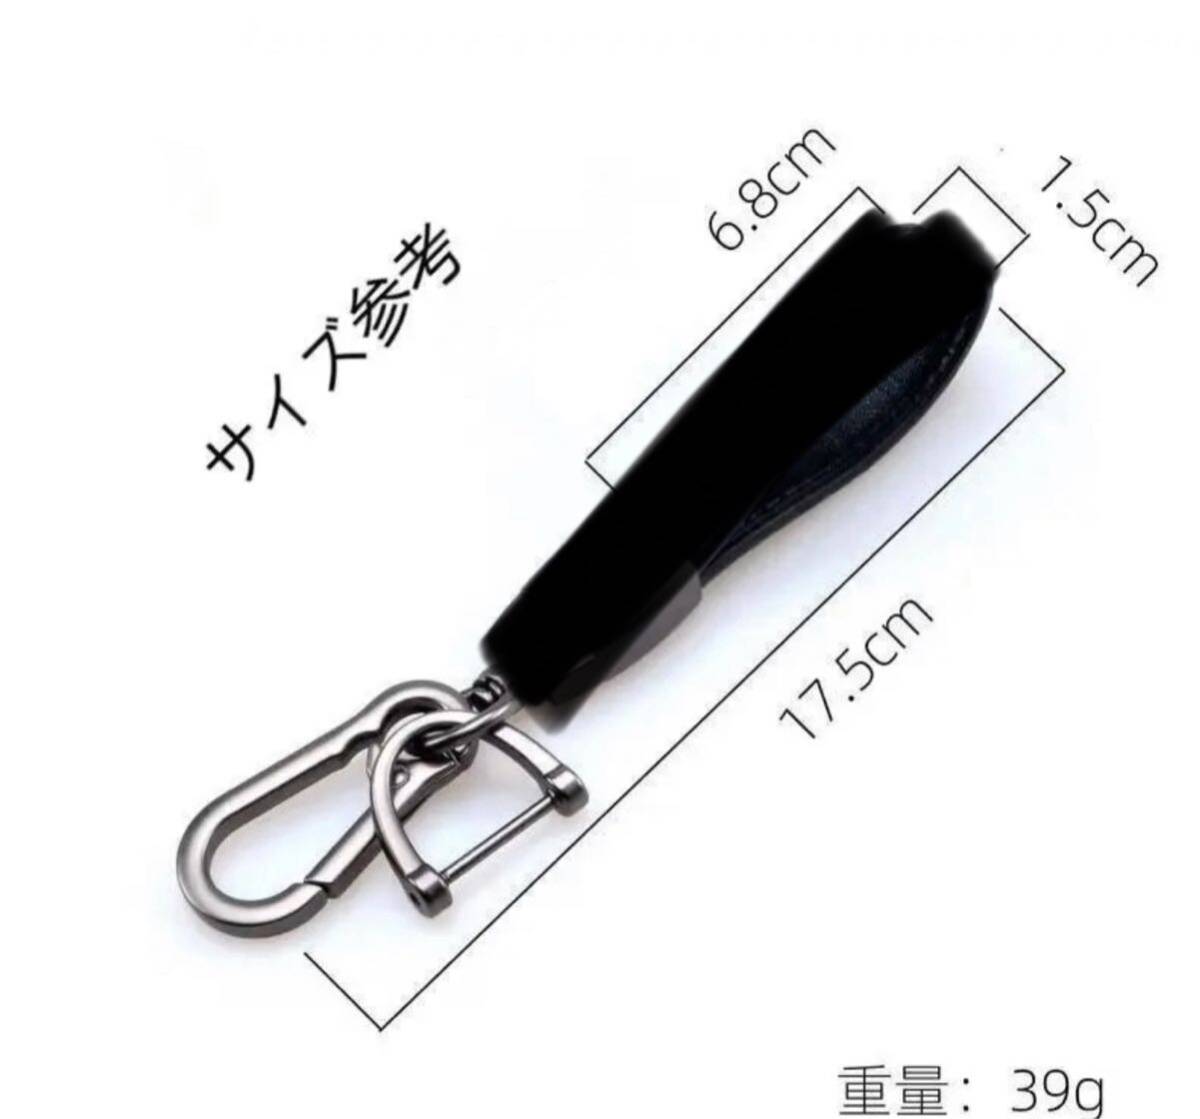  Mitsubishi 　 Mitsubishi 　 ключ  держатель   ключ  кольцо  